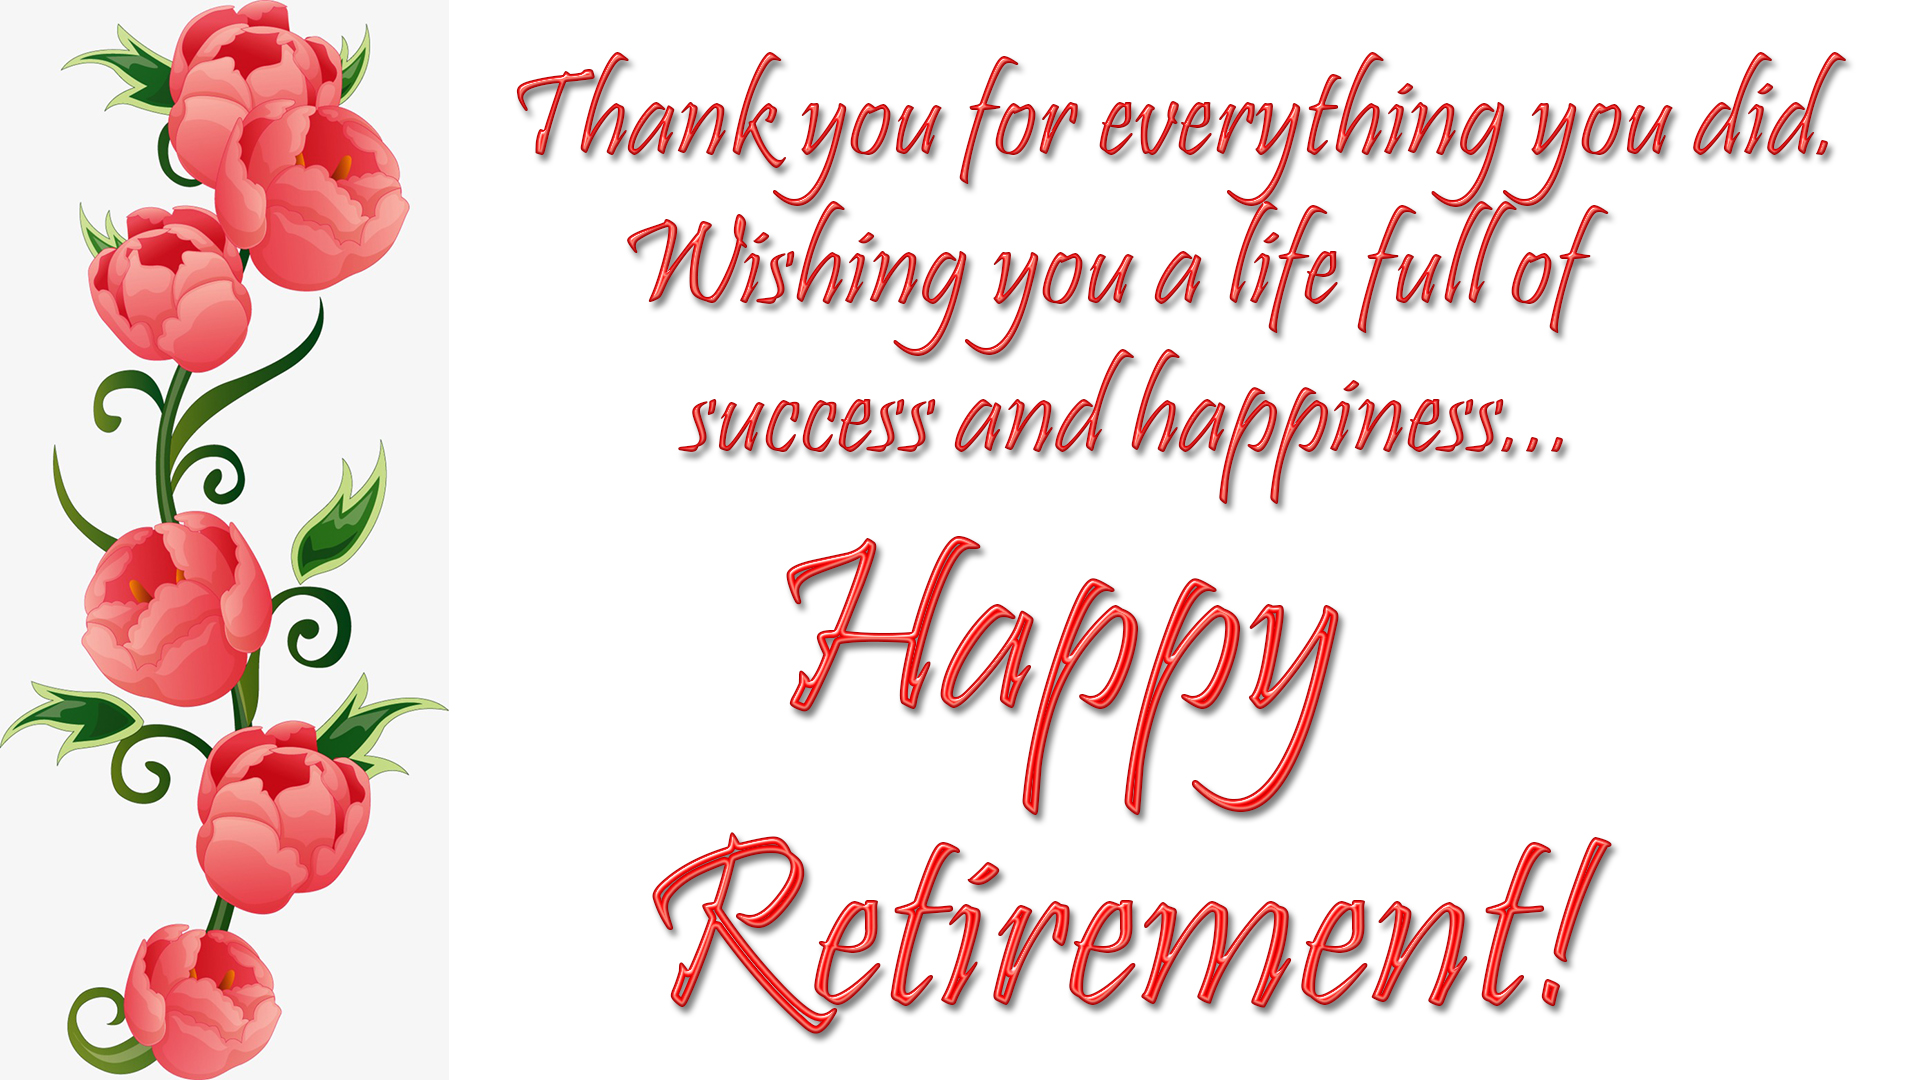 retirement wishes image